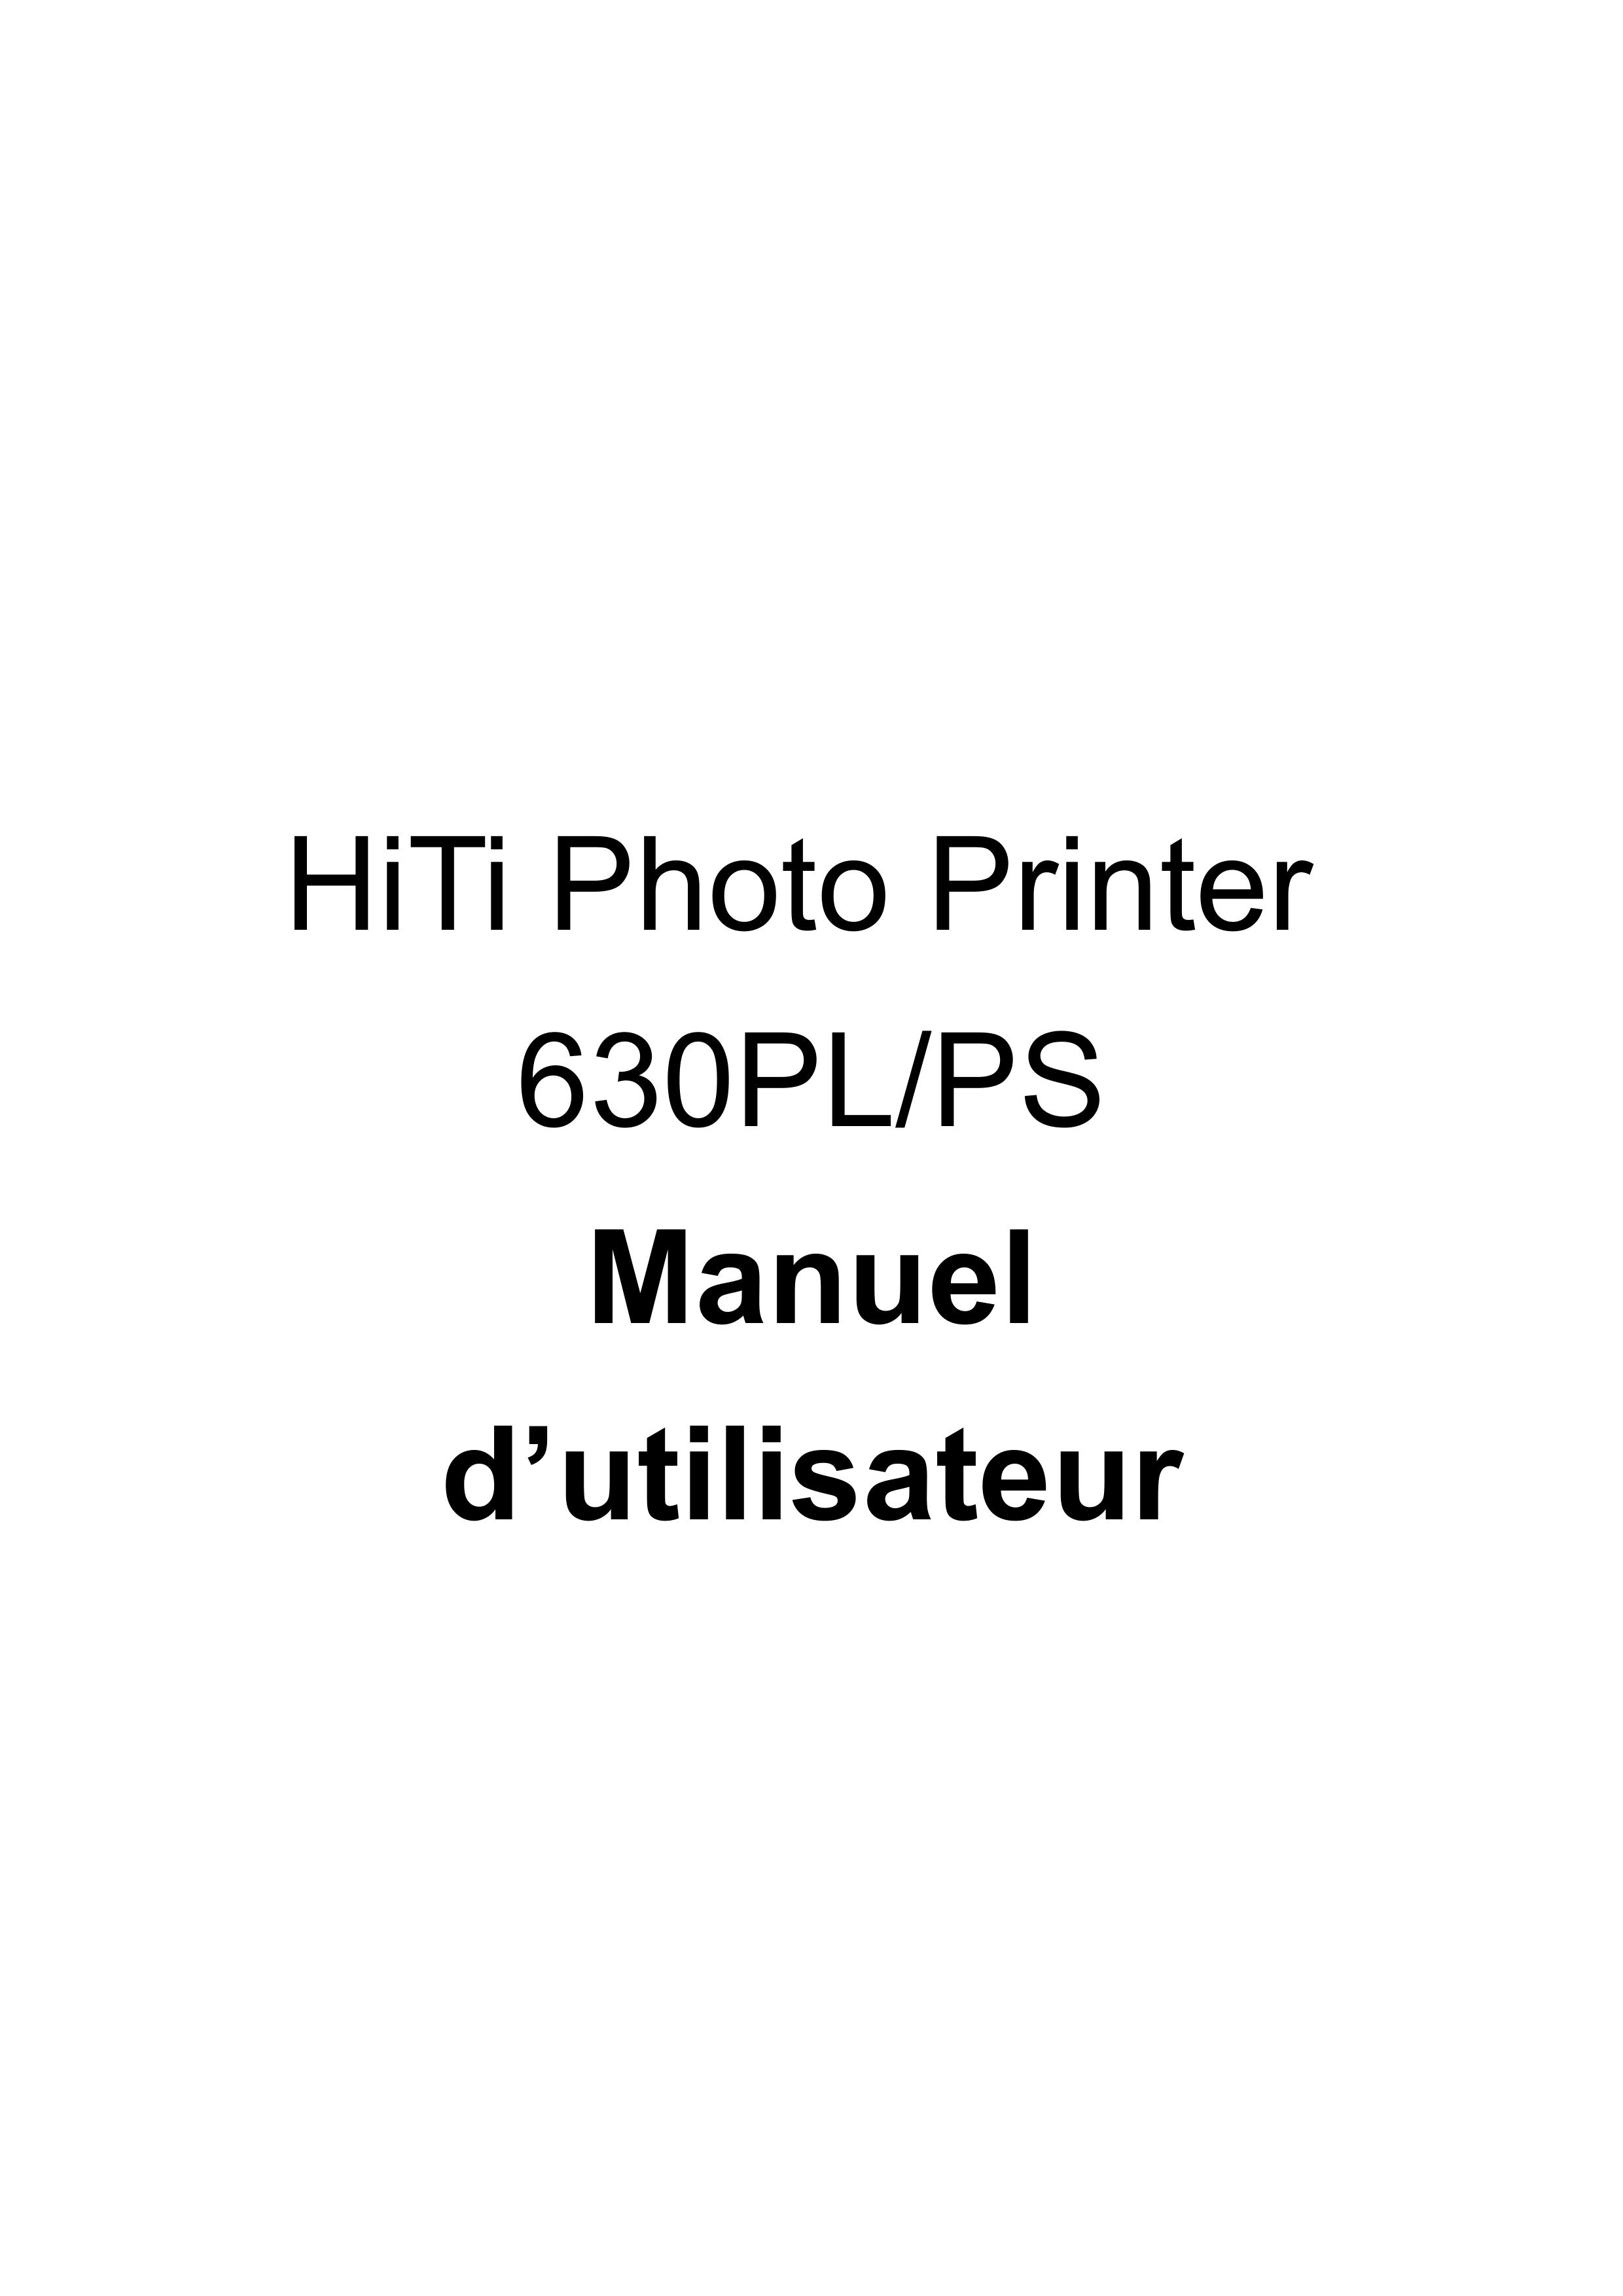 Hi-Touch Imaging Technologies 630PL/PS Photo Printer User Manual